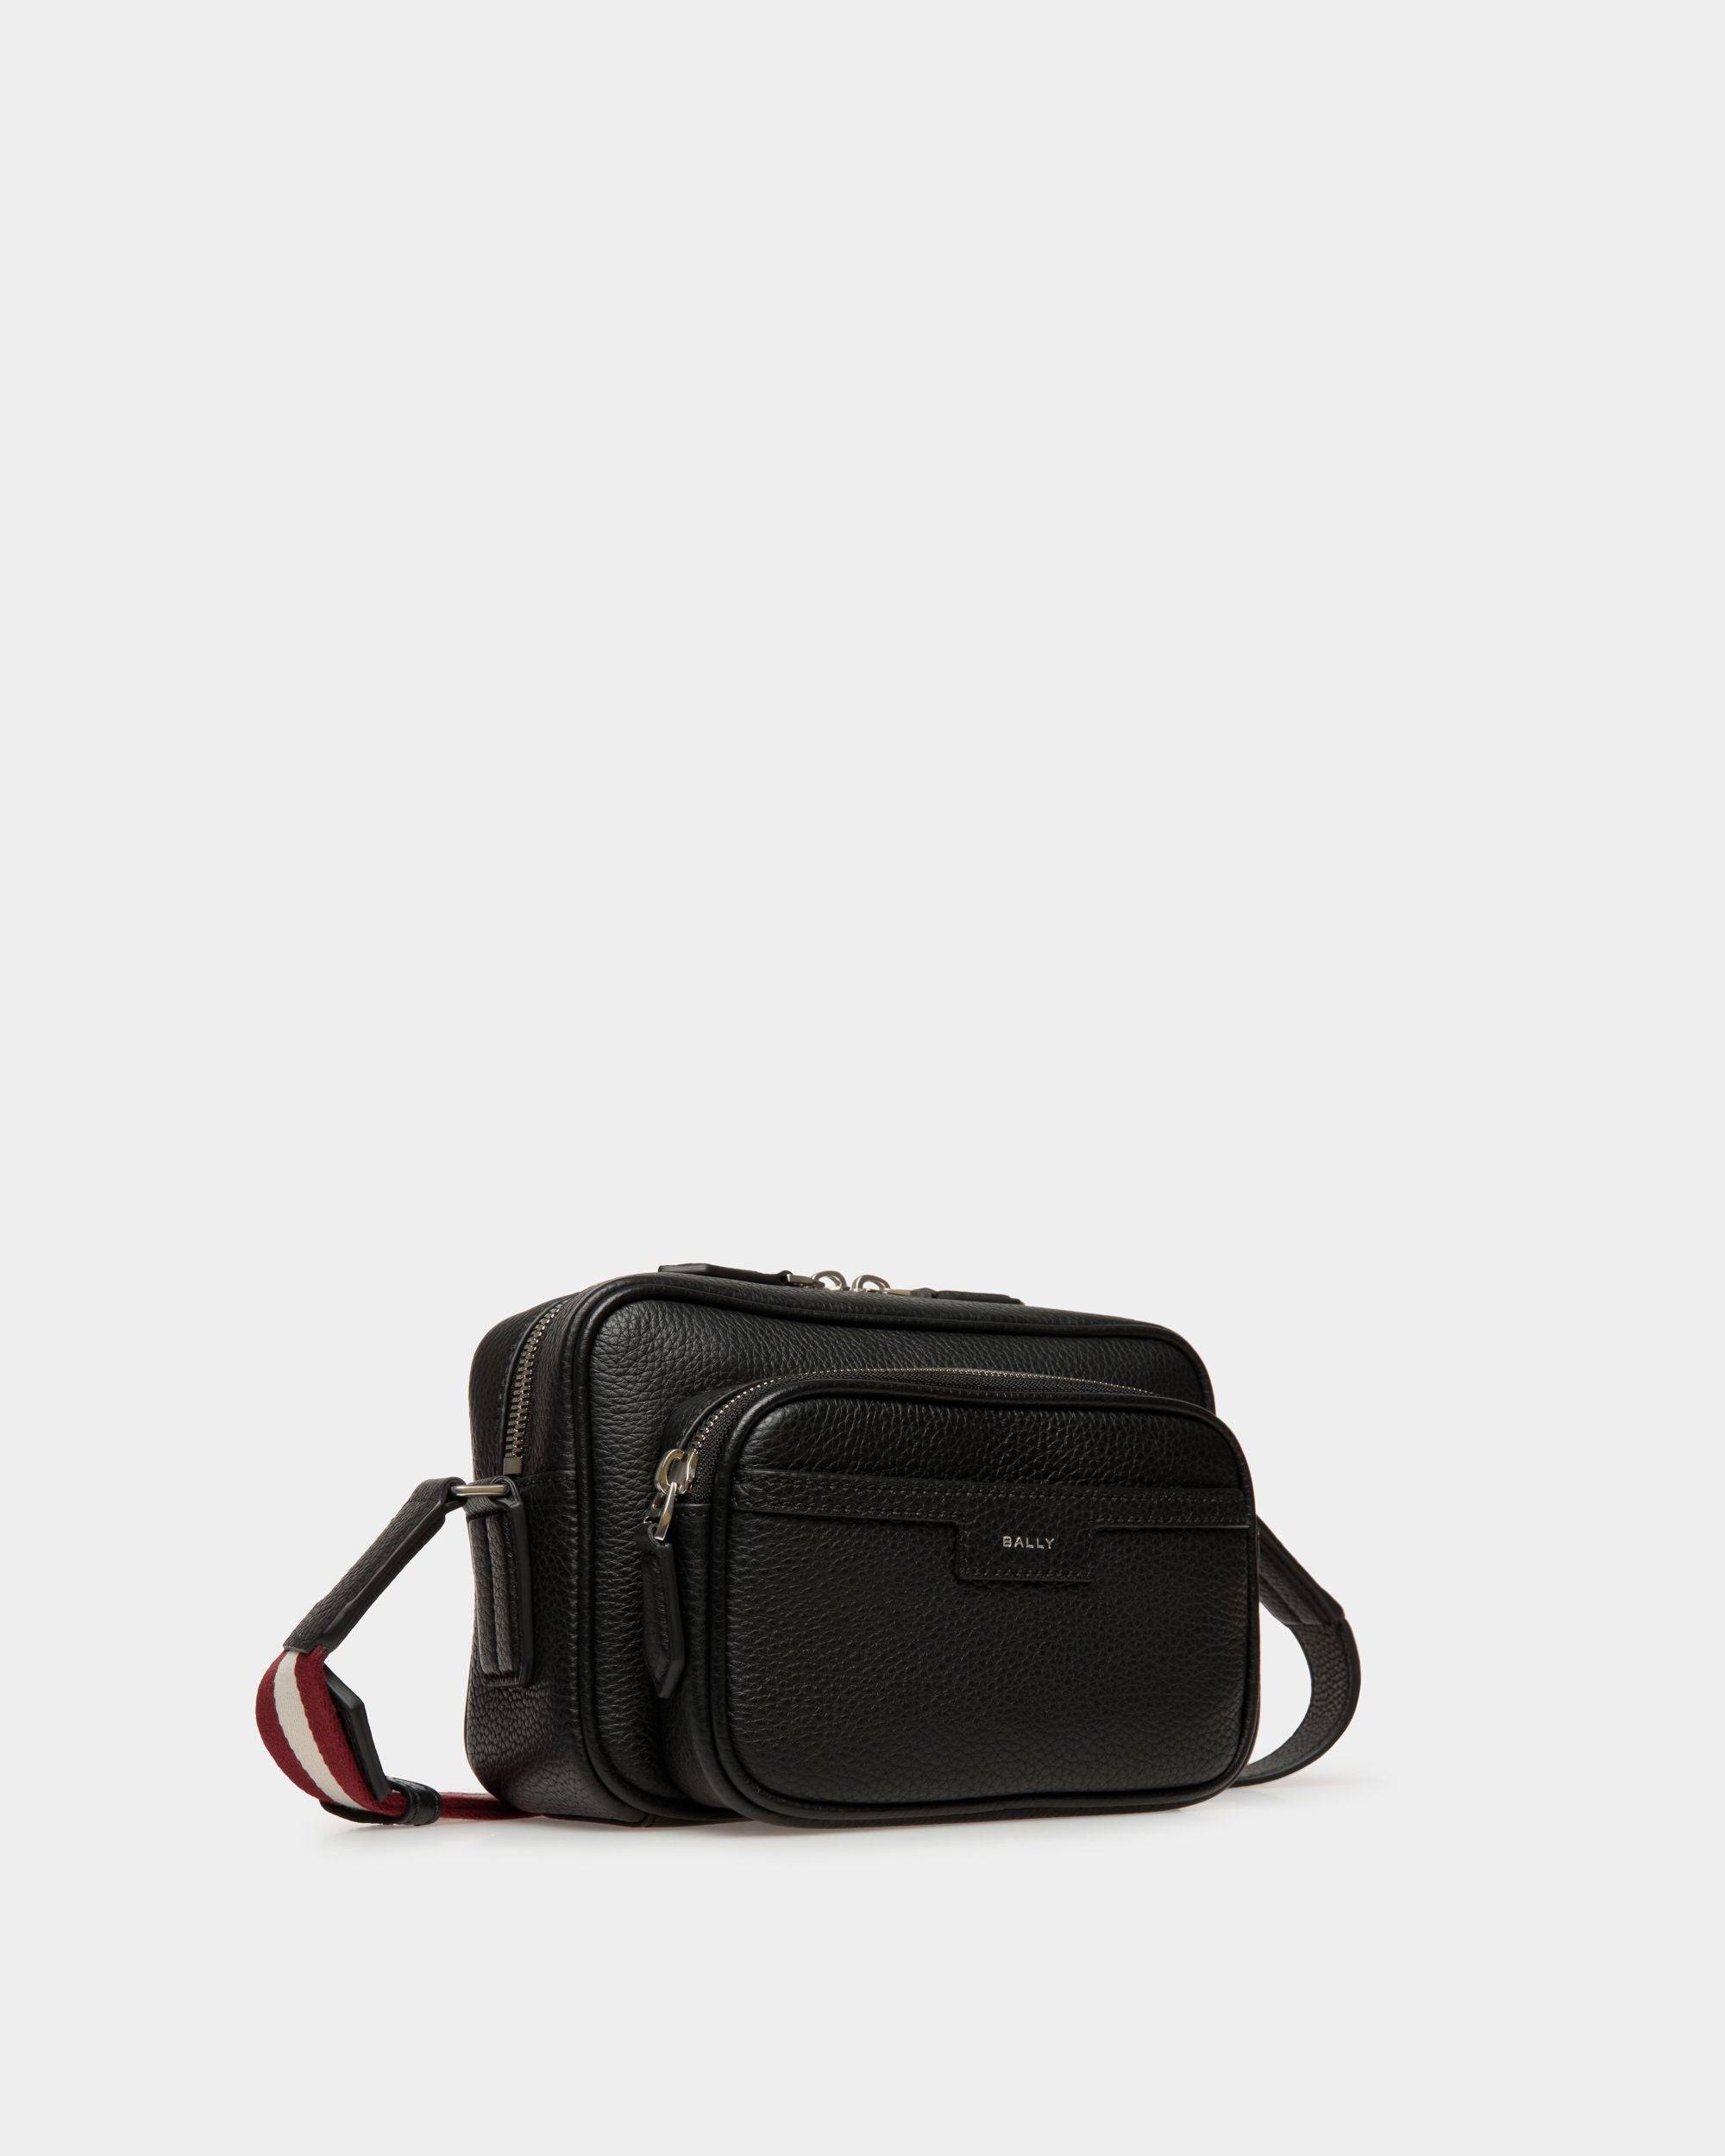 Code | Men's Crossbody Bag in Black Grained Leather | Bally | Still Life 3/4 Front